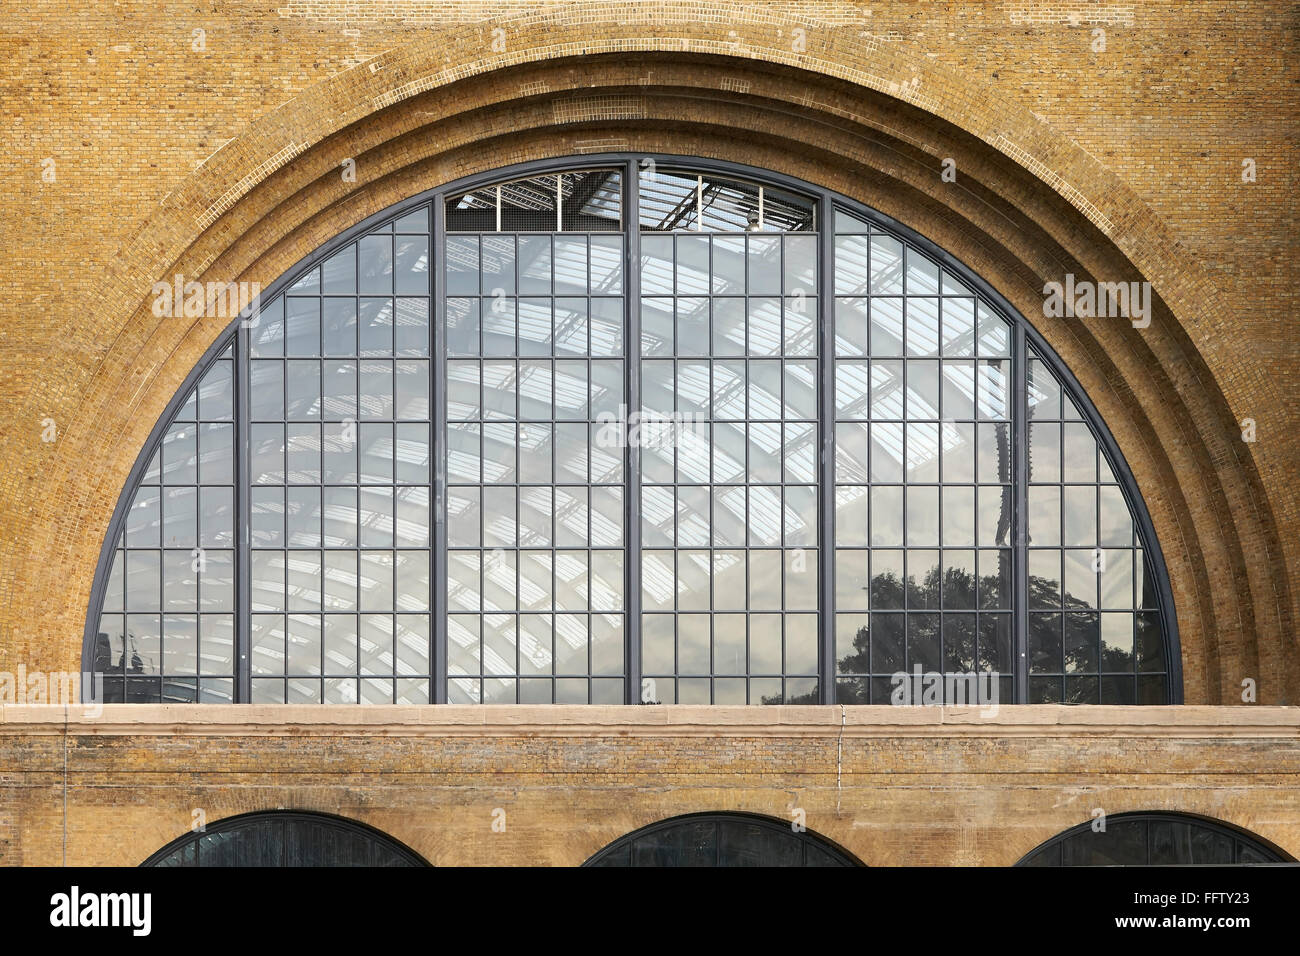 Detailed elevation with arched window glazing. King's Cross Square, London, United Kingdom. Architect: Stanton Williams Architec Stock Photo